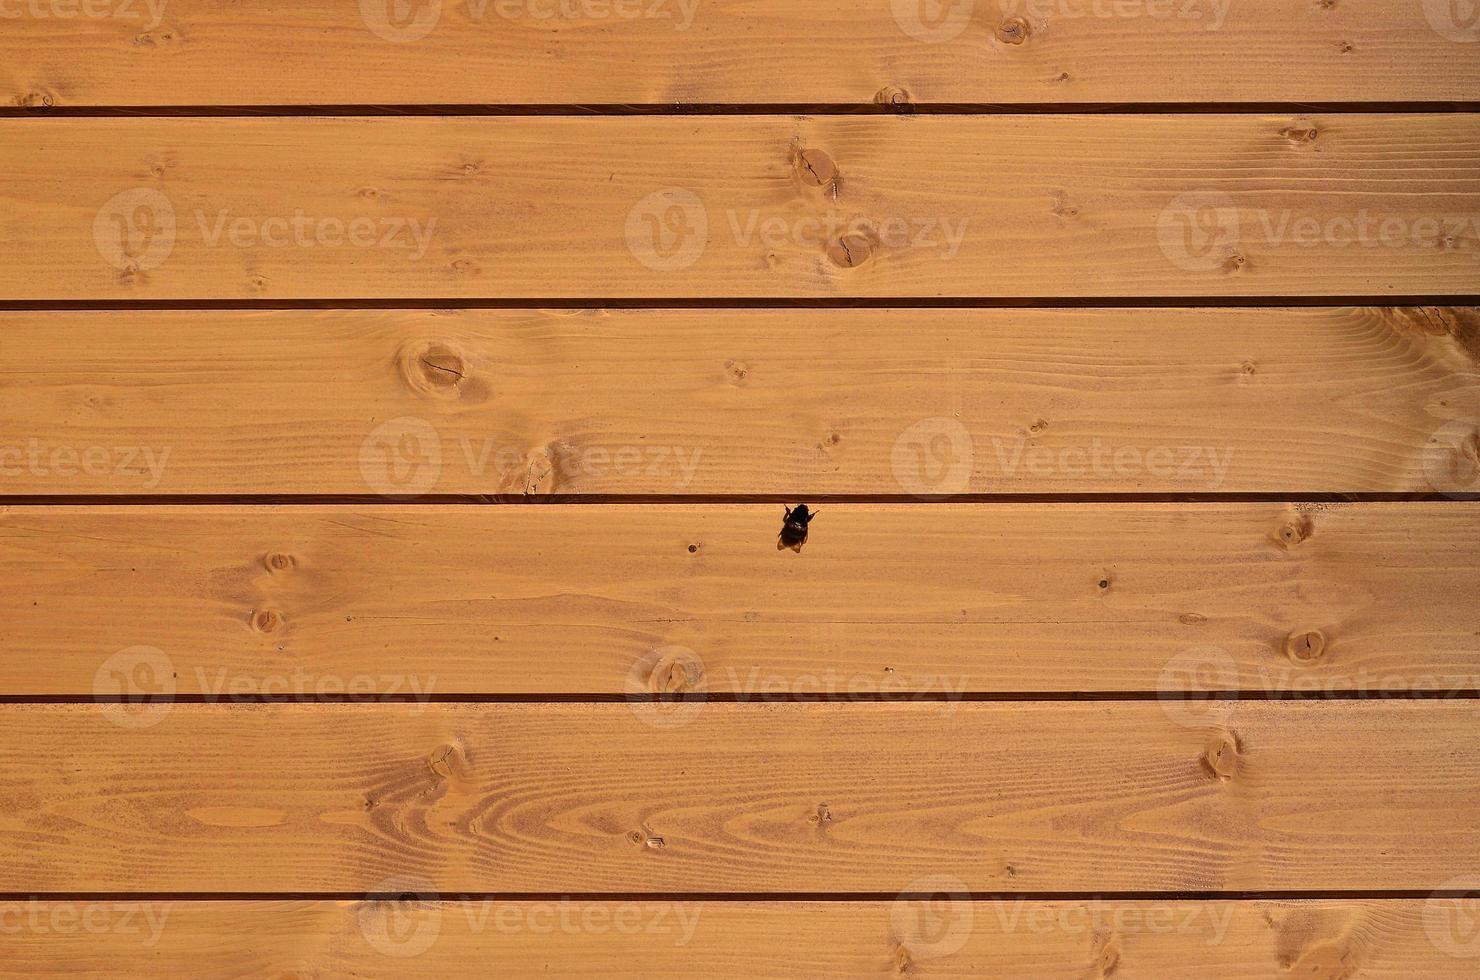 textura de una antigua valla de tablones horizontales de madera naranja con abejas sentadas sobre ellos foto